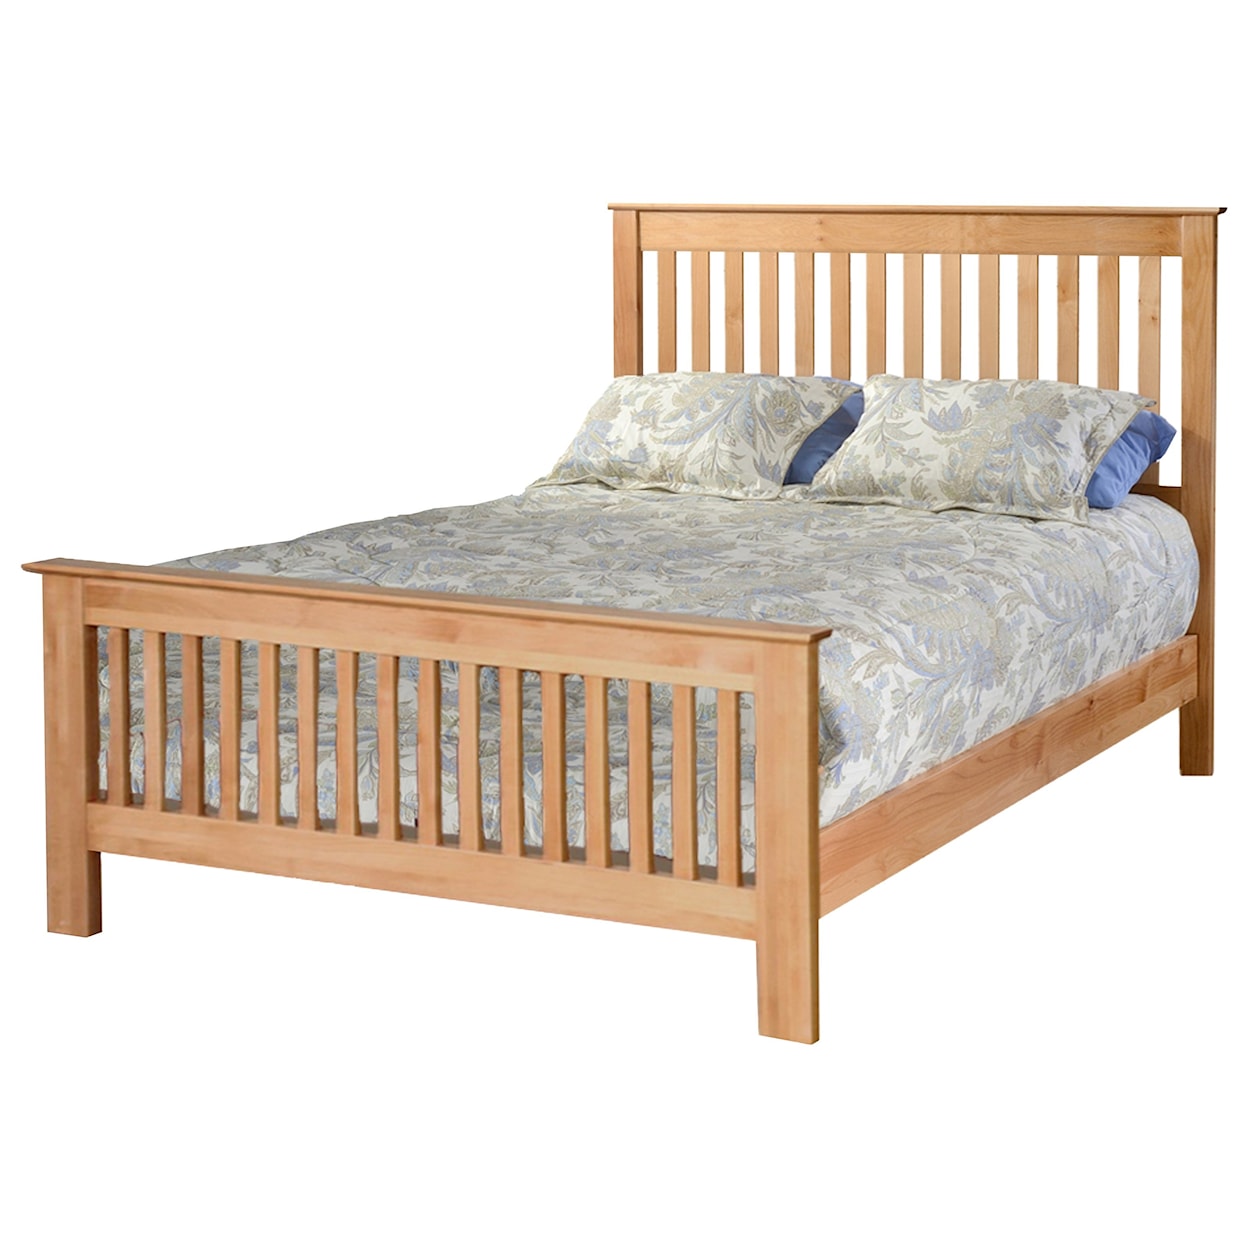 Archbold Furniture DO NOT USE - Shaker King Slat Bed